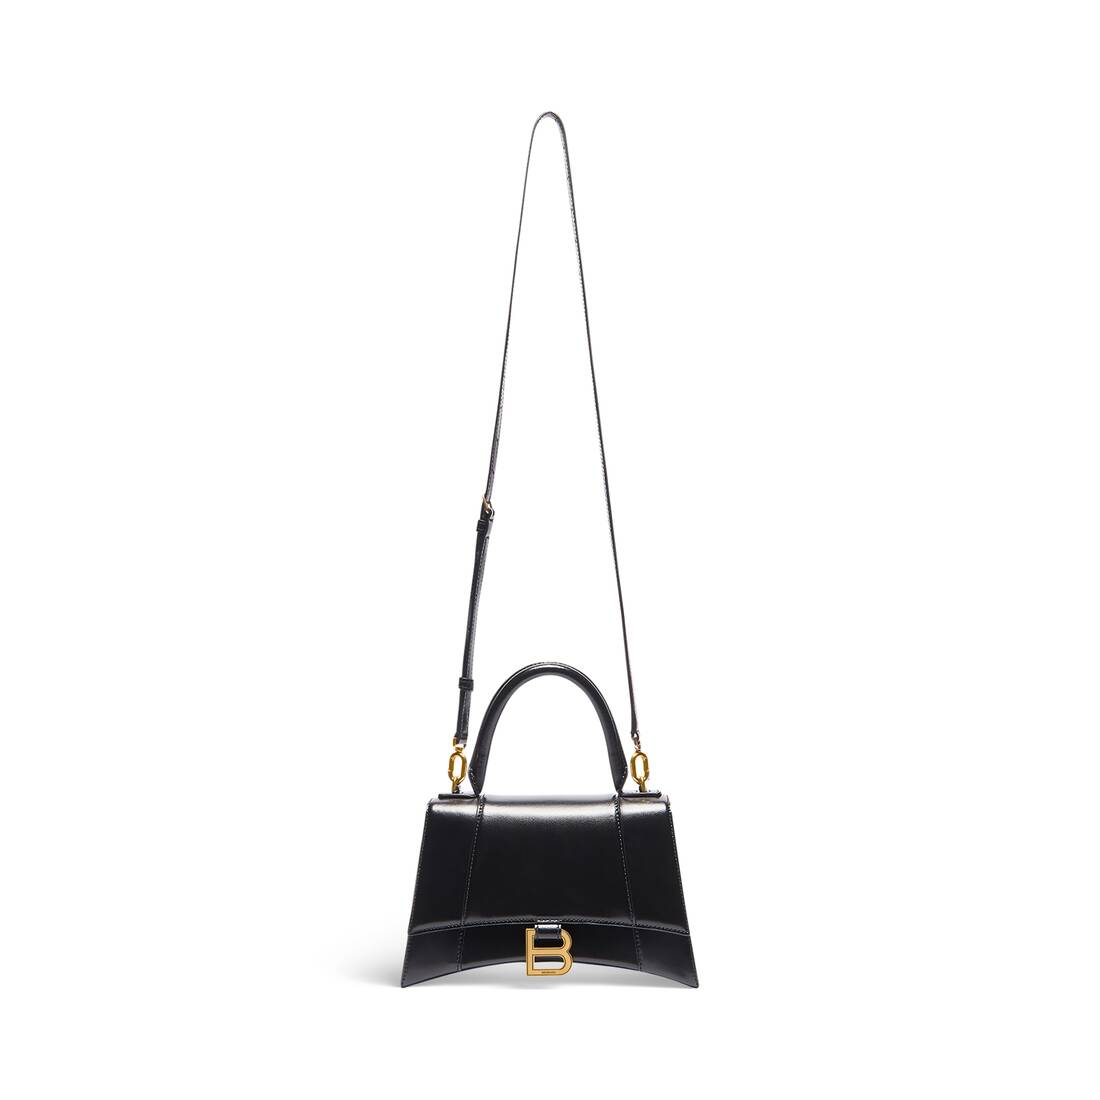 Balenciaga - Black Hourglass Small Bag